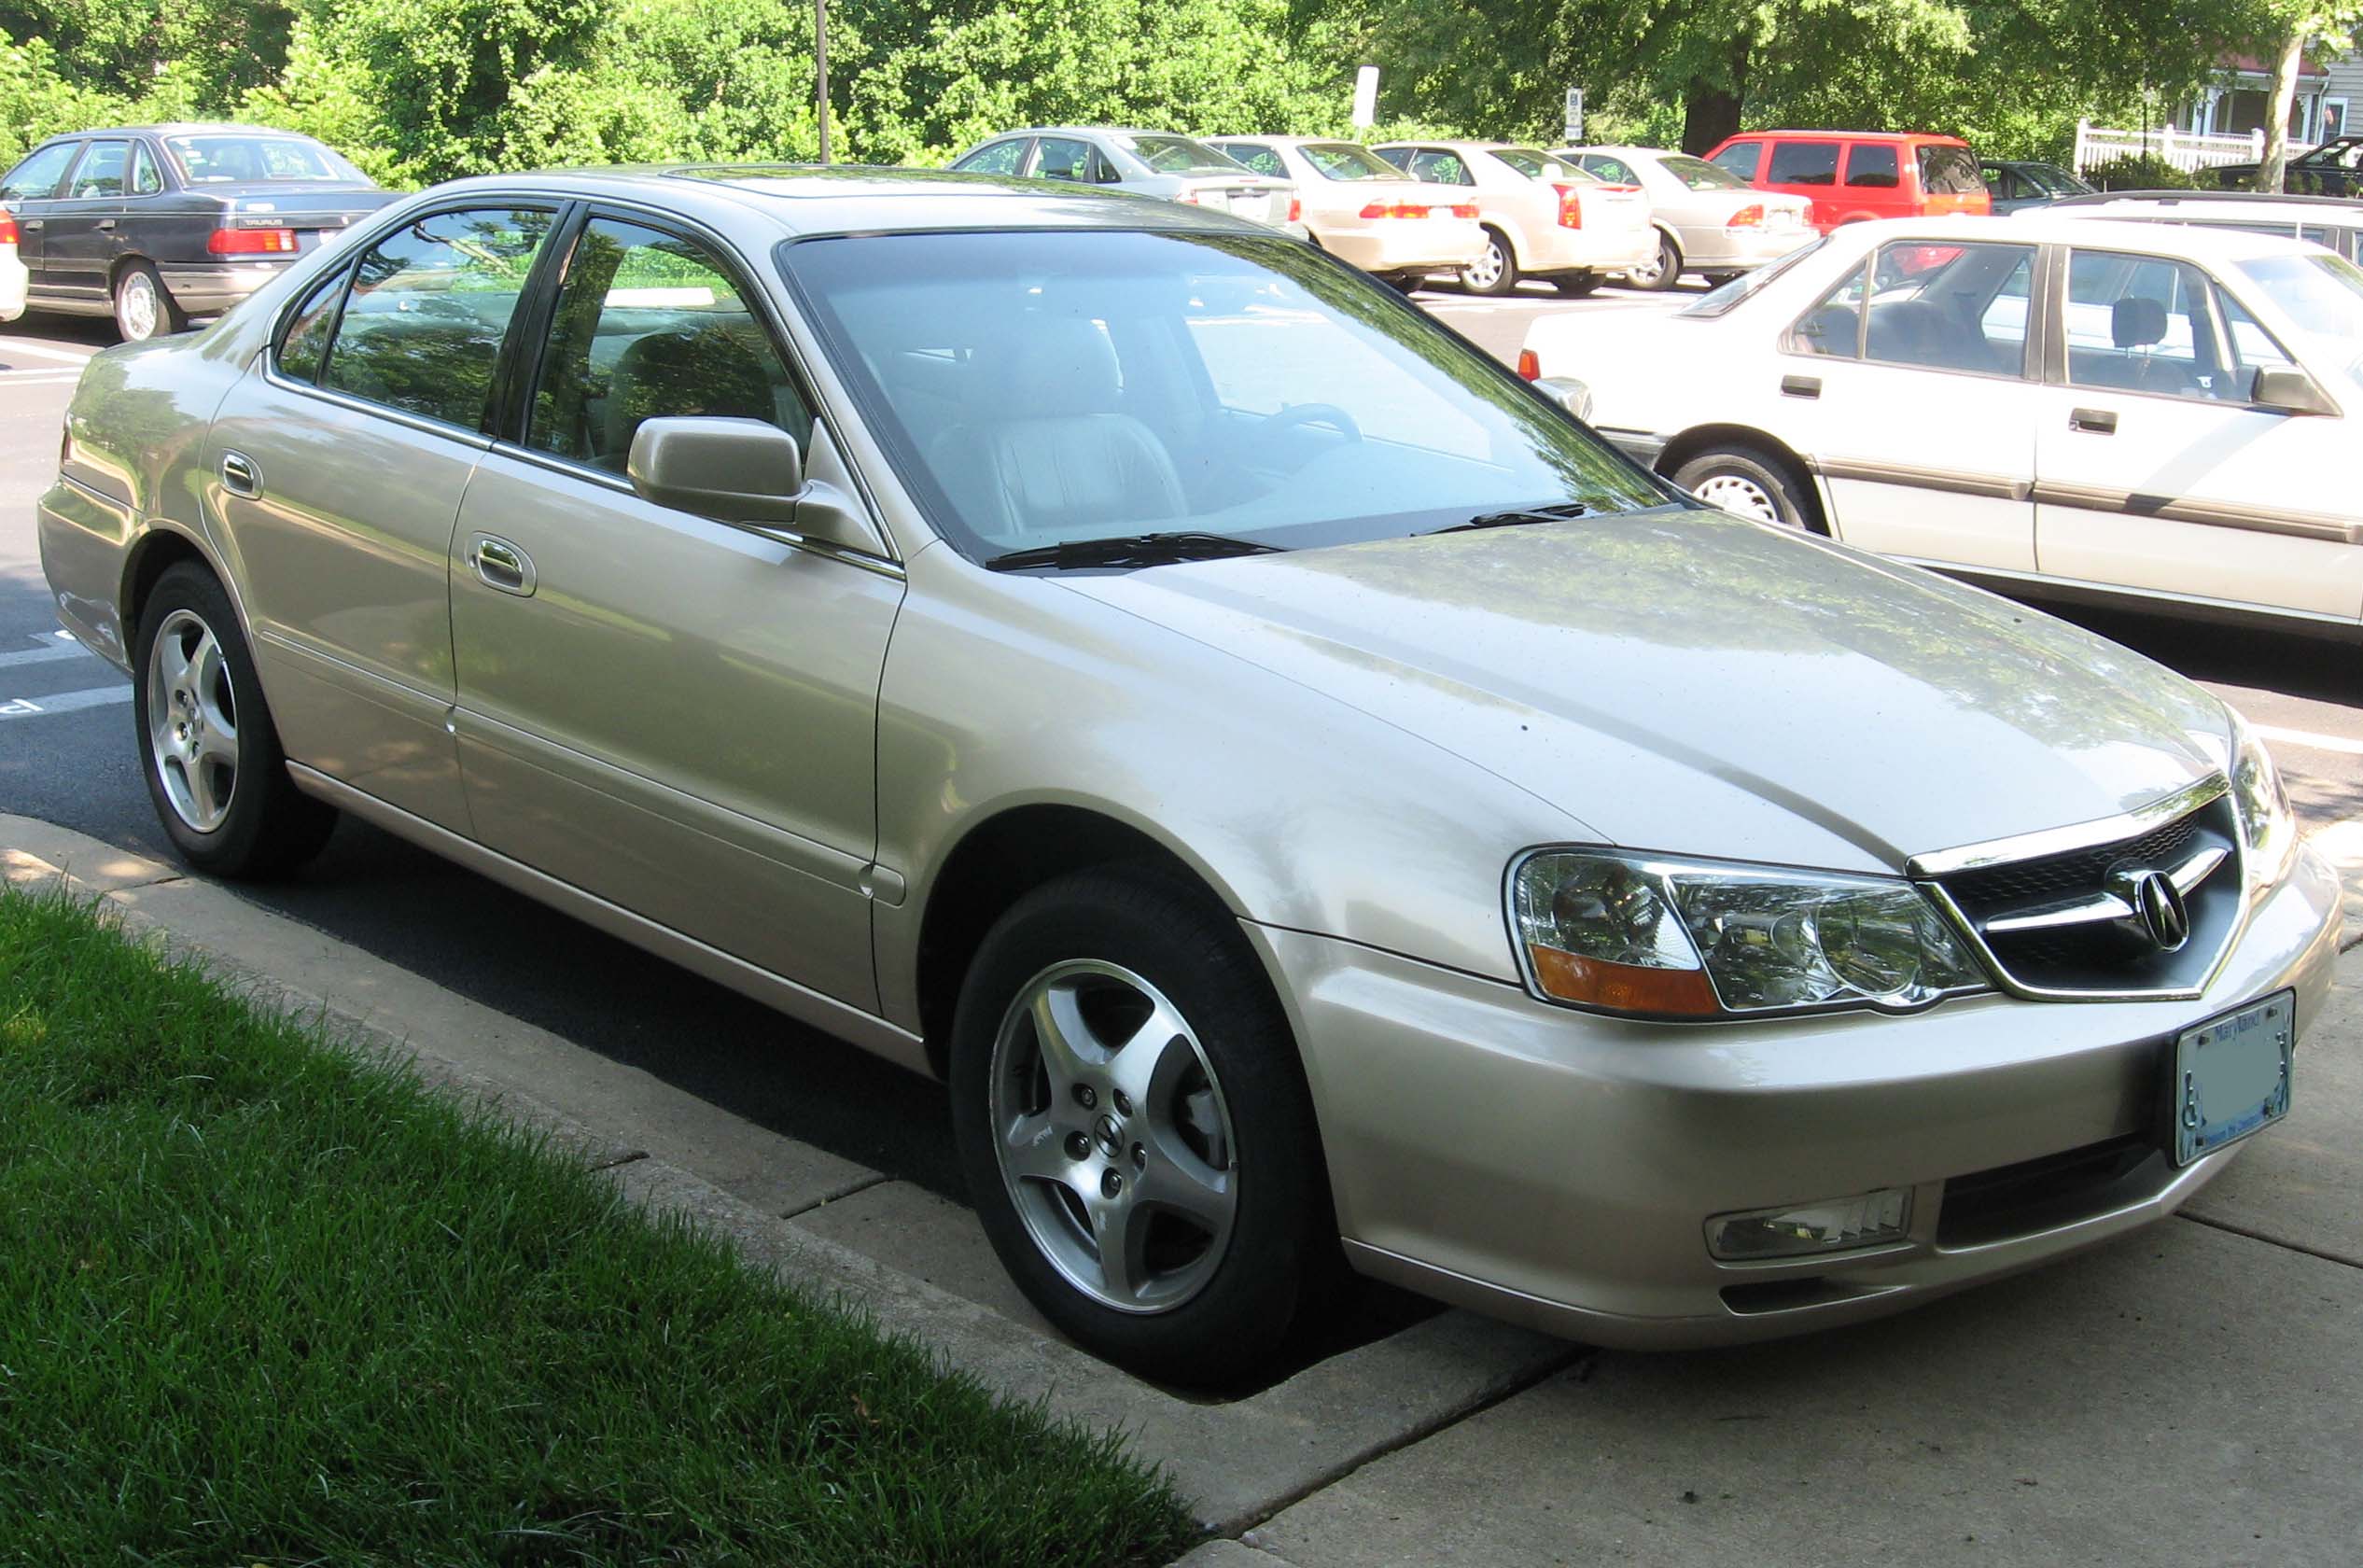 File:2002-03 Acura 3.2TL.jpg - Wikimedia Commons